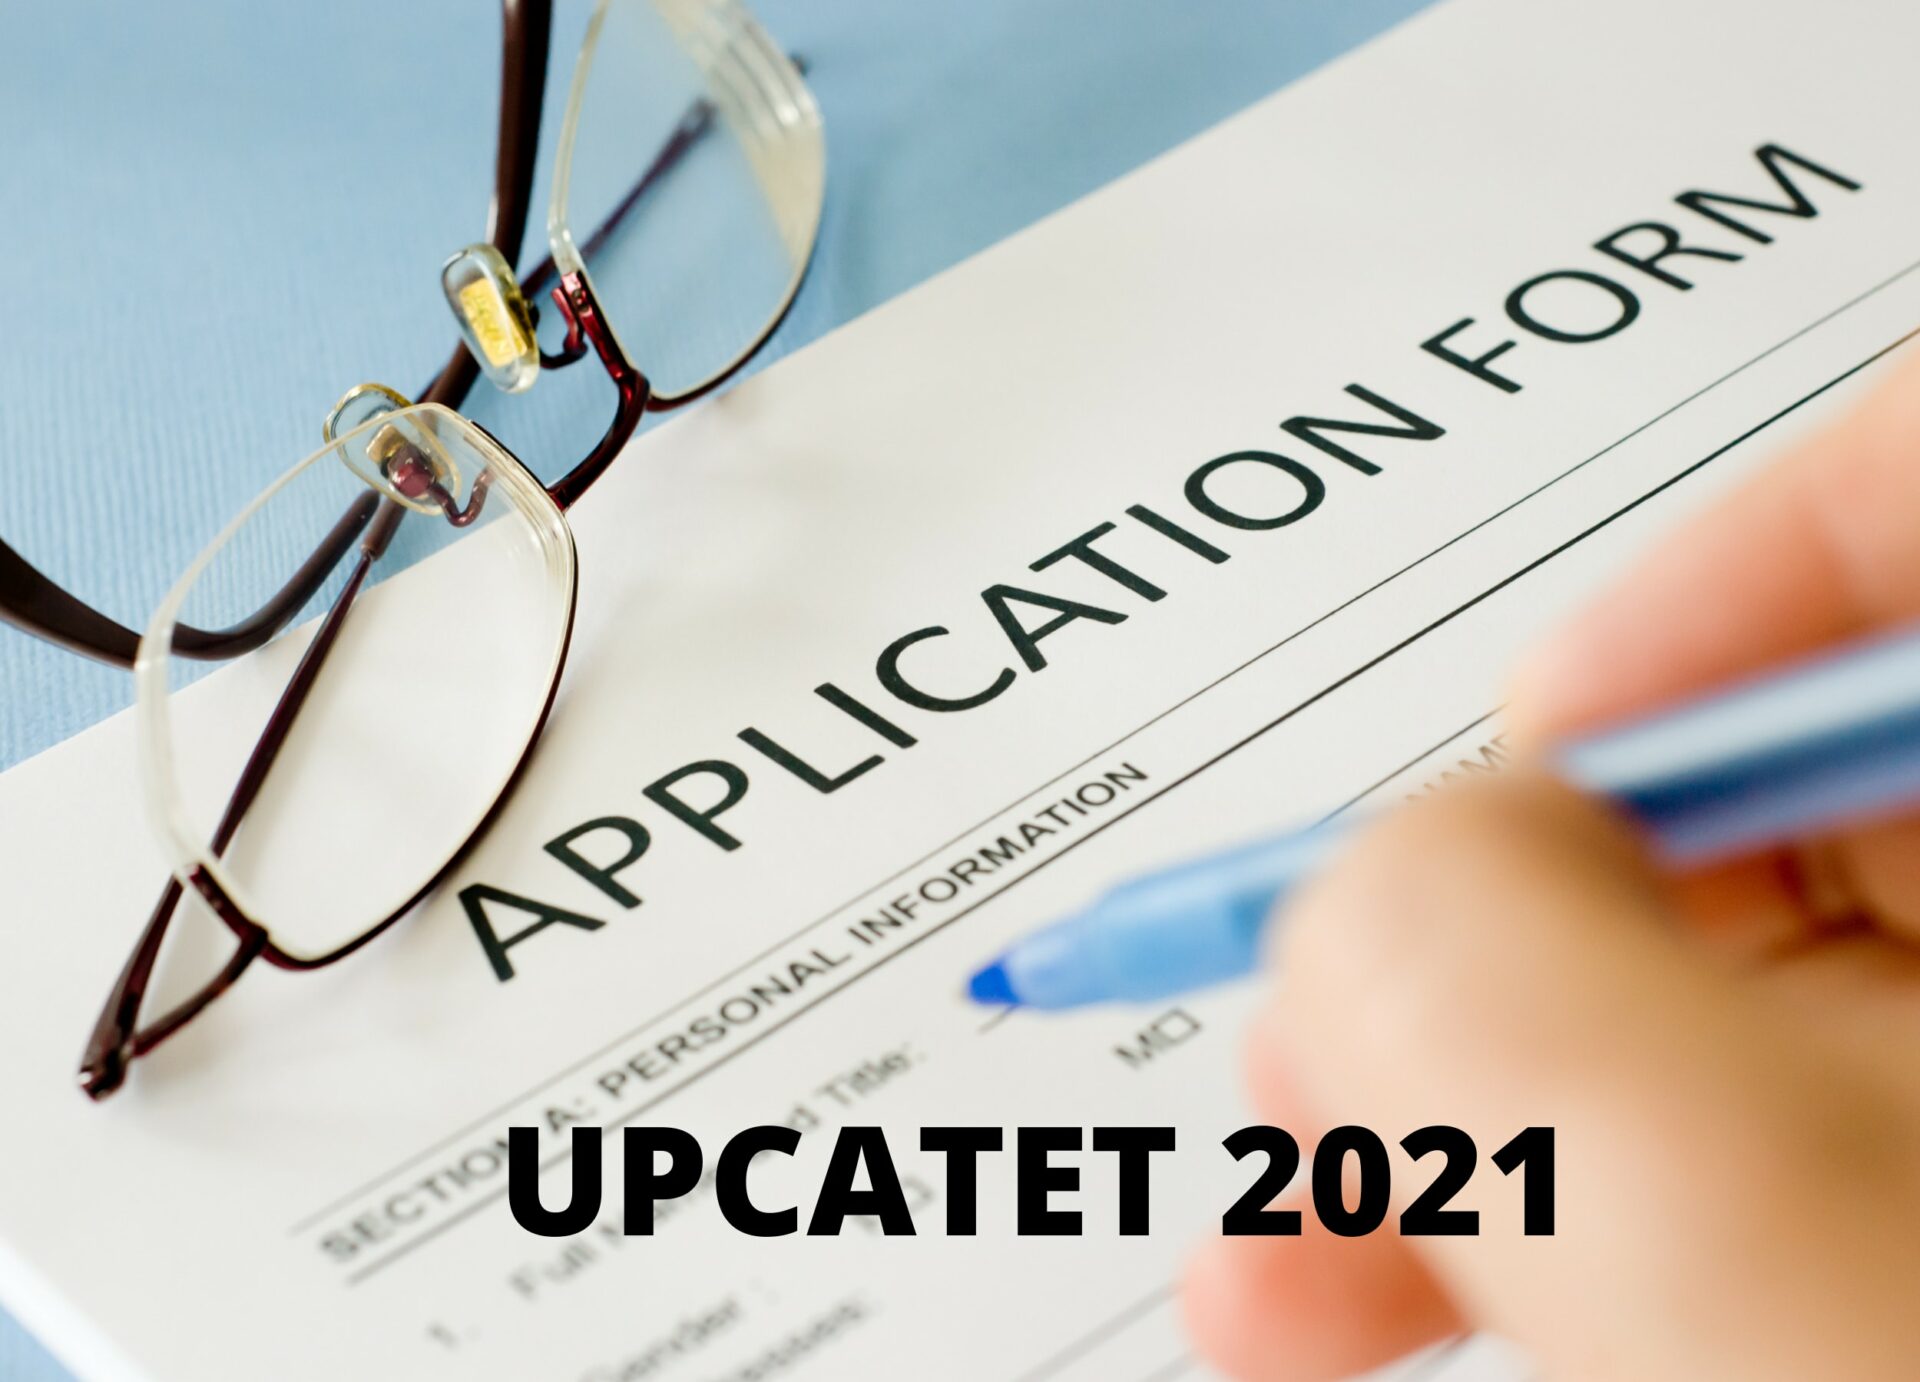 UPCATET 2021 application form